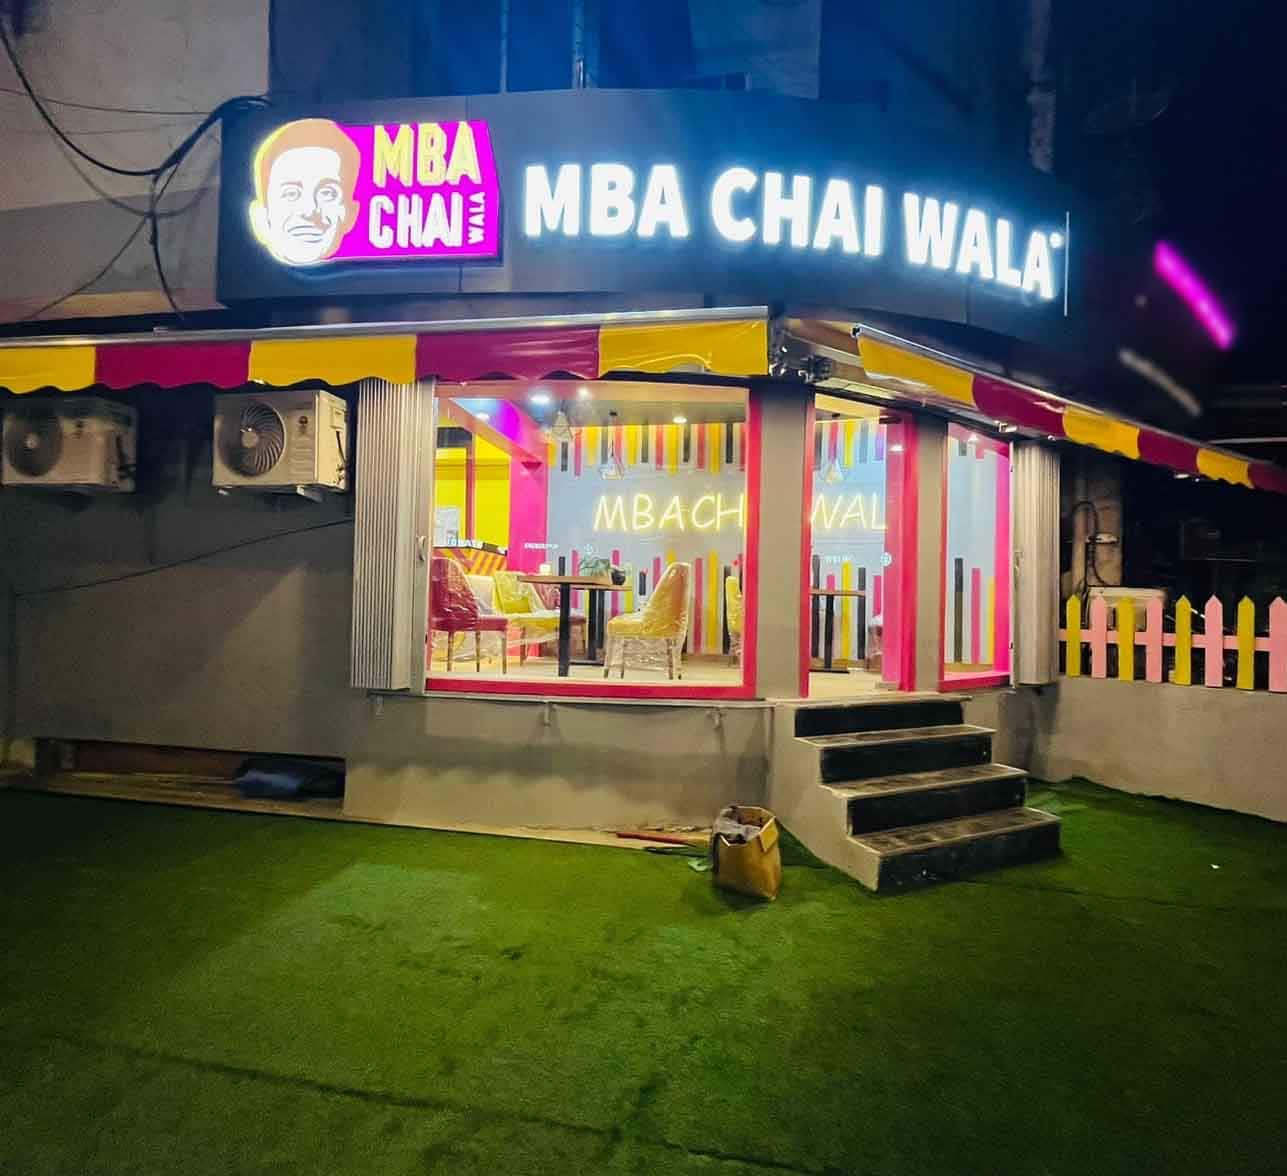  MBA chai wala Net worth